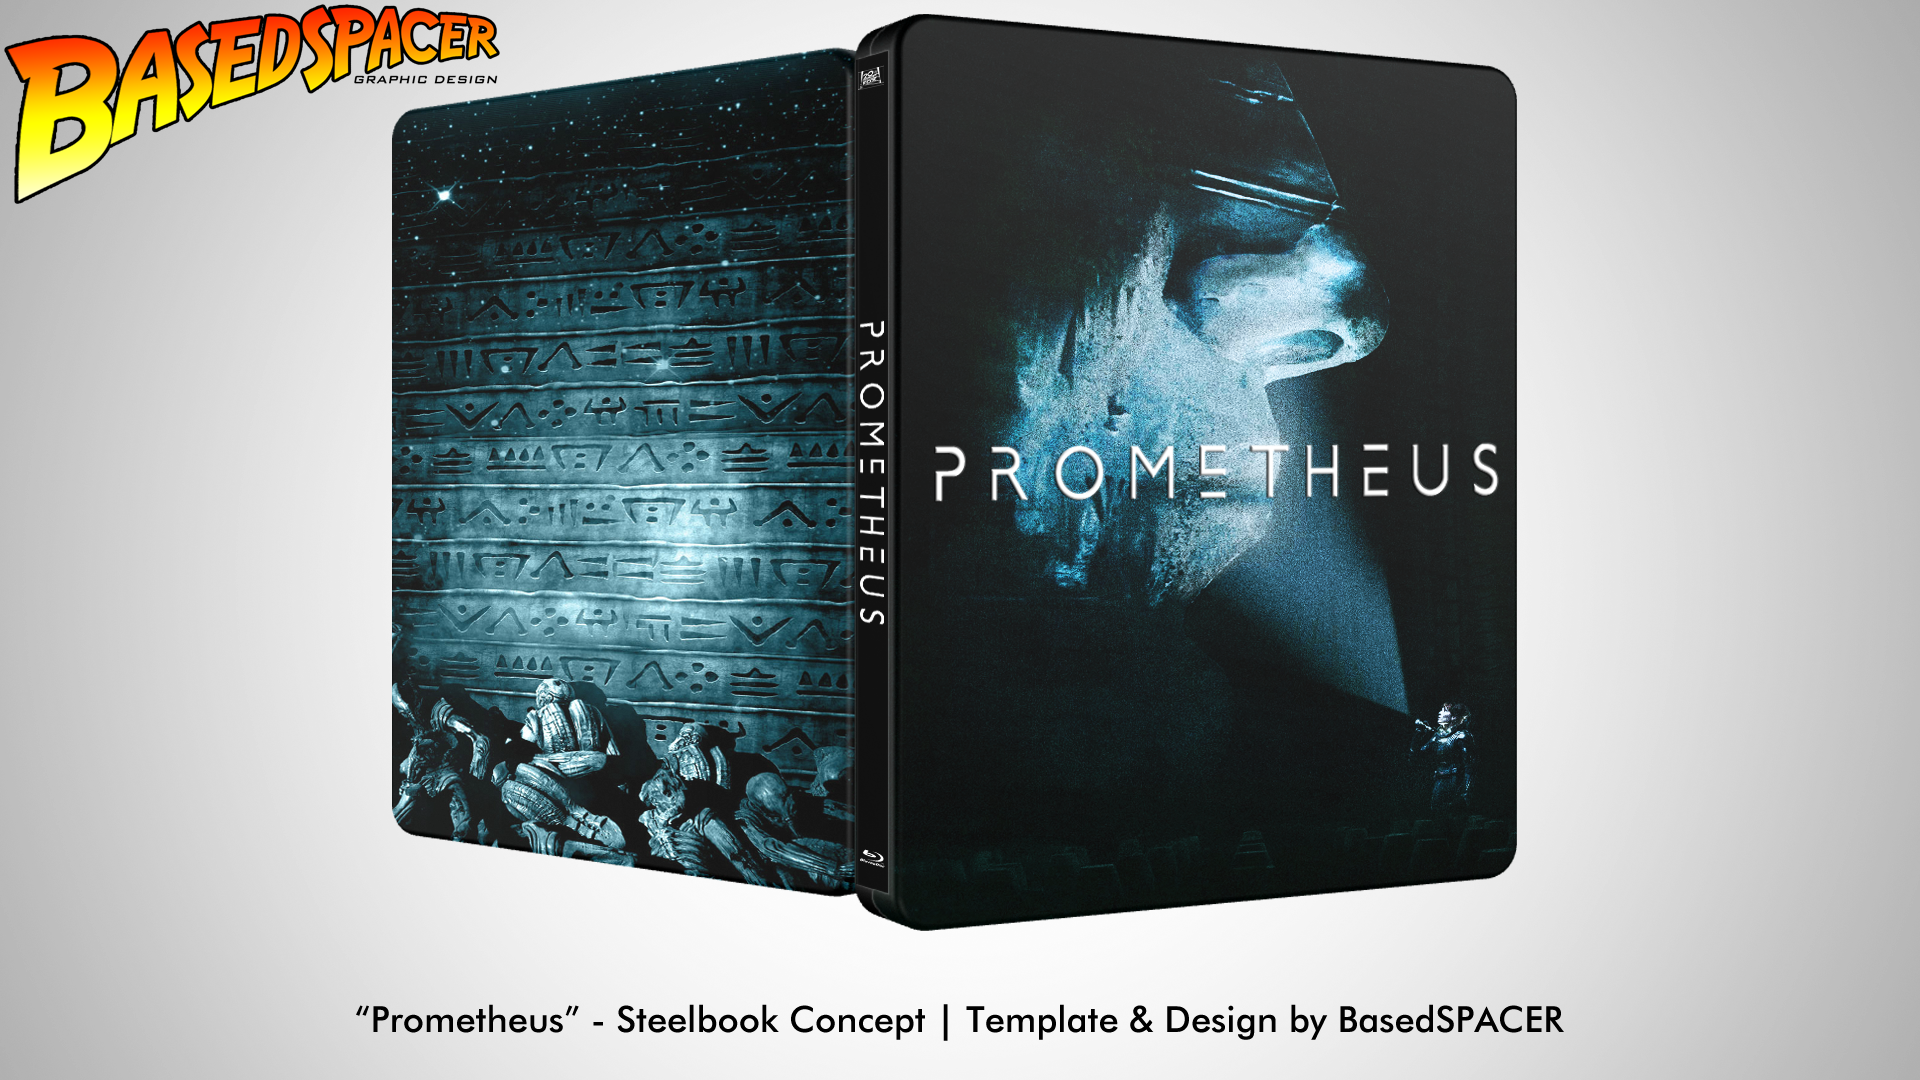 Prometheus - Steelbook Concept box cover